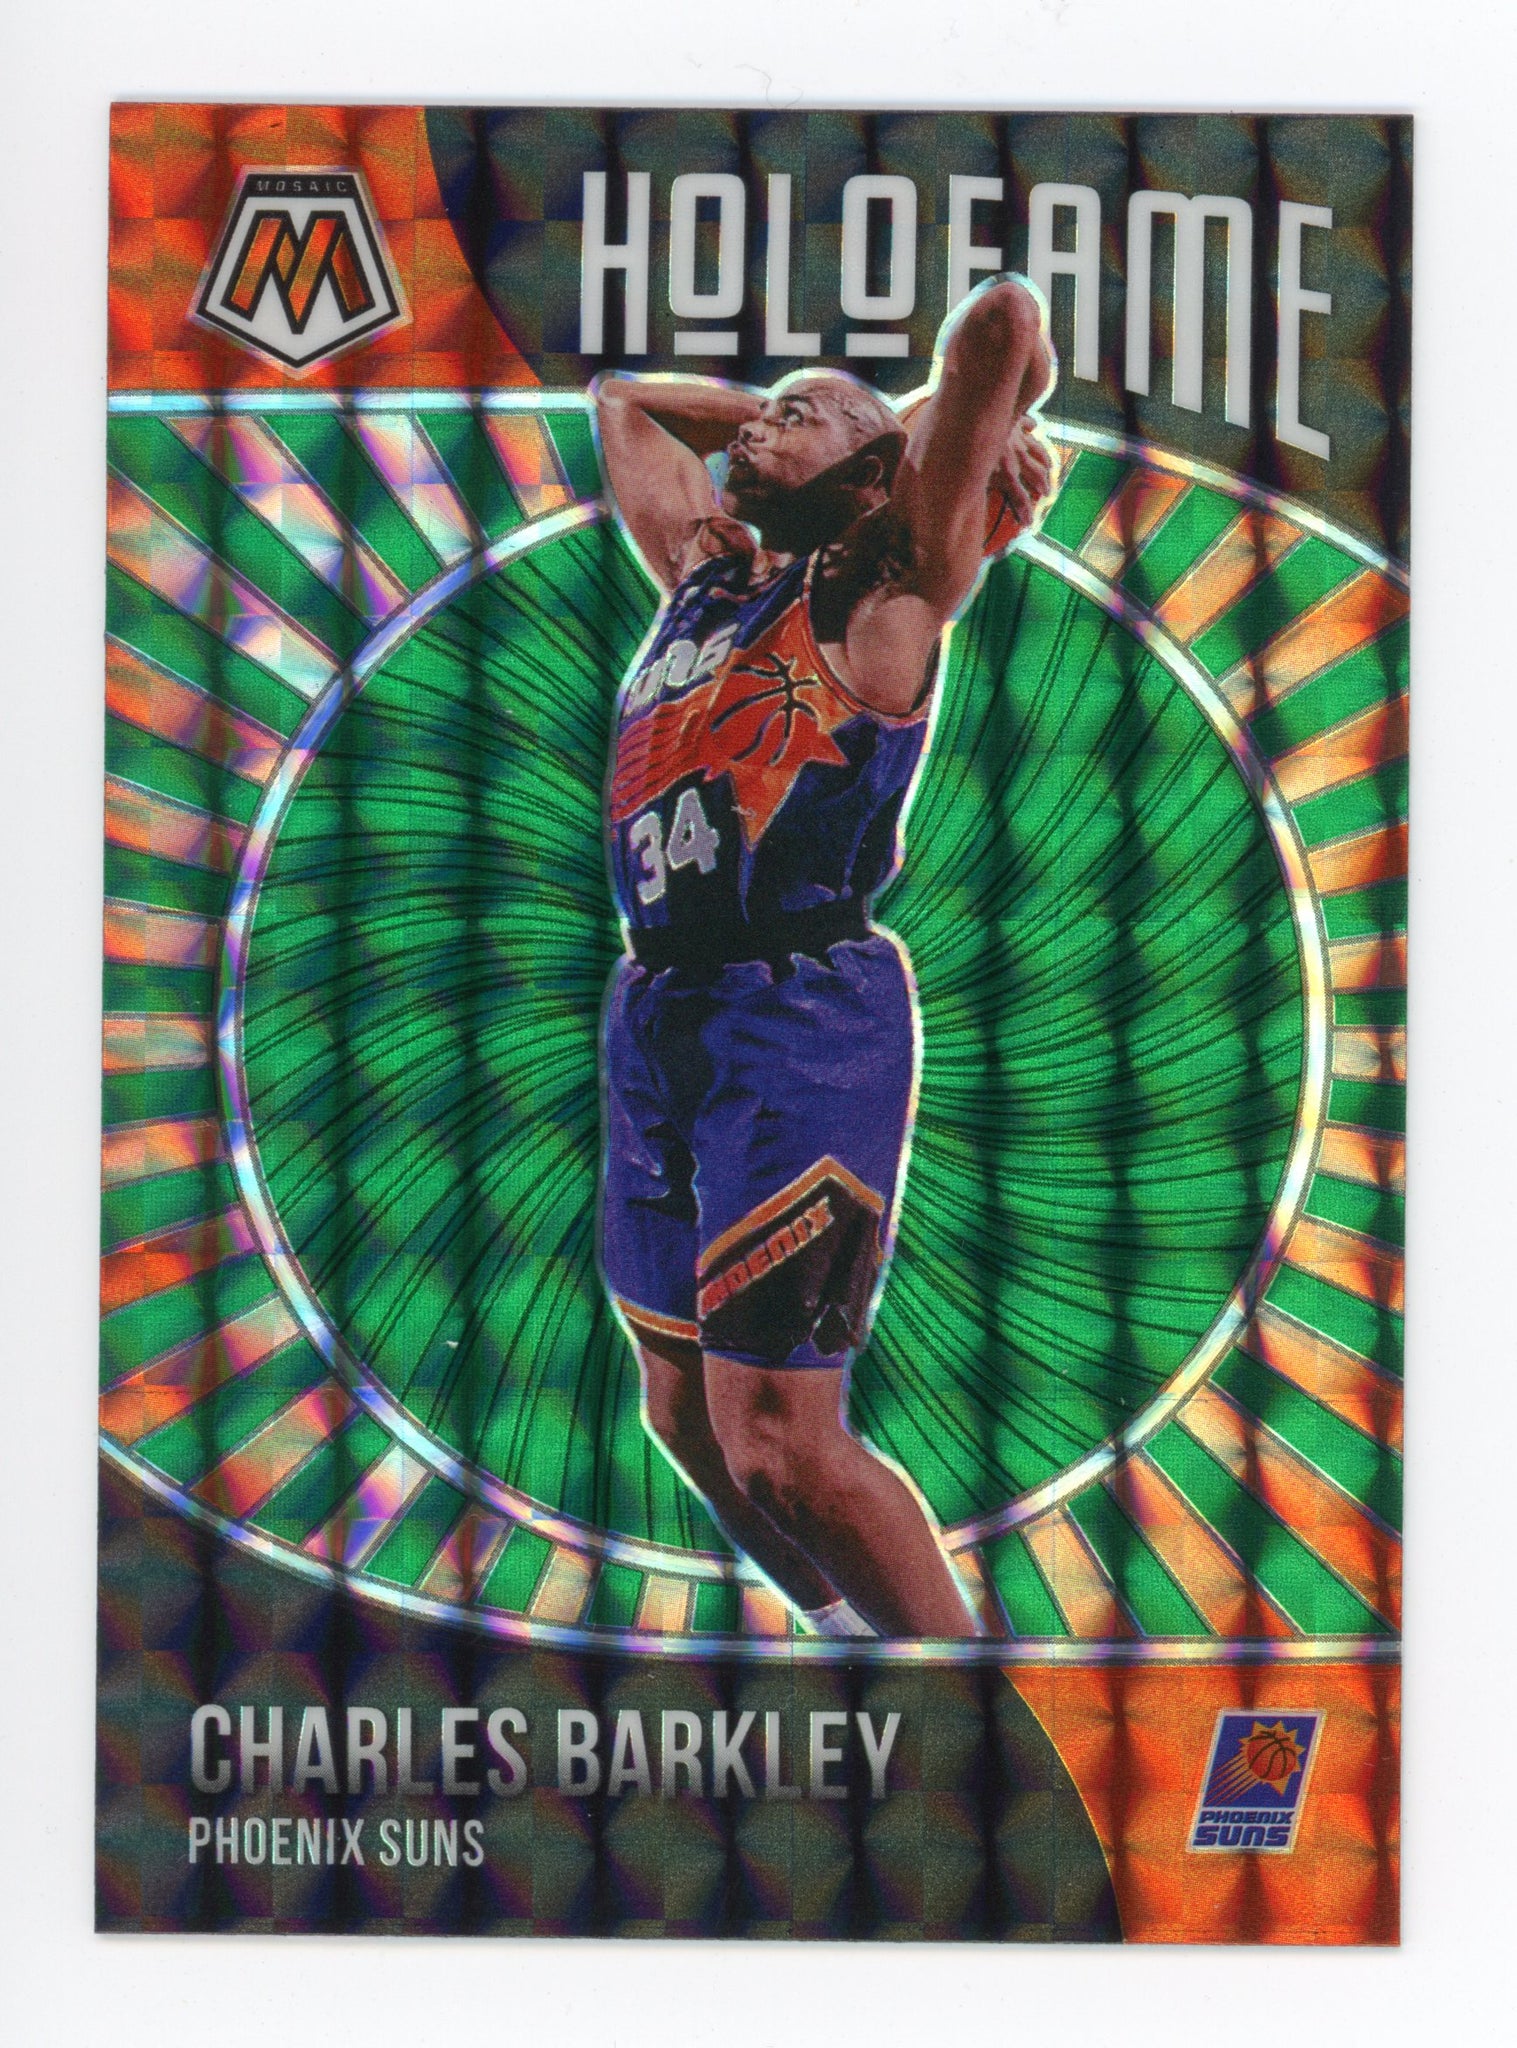 2020-2021 Charles Barkley Hol O Fame Mosaic Phoenix Suns # 2